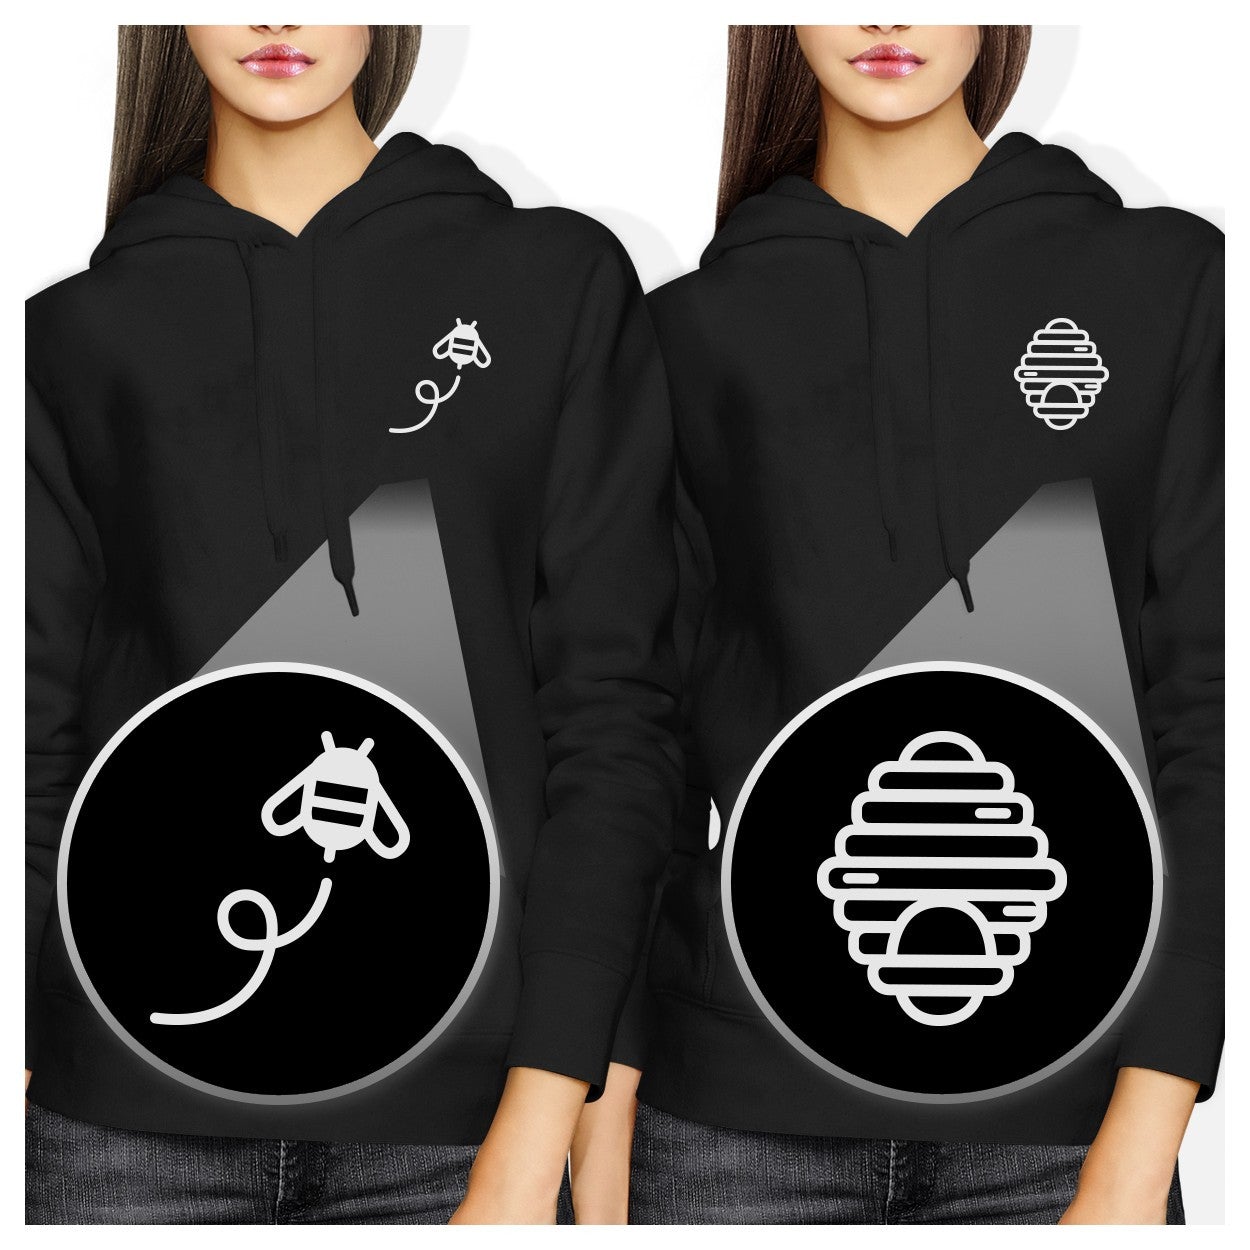 Honey Comb And Bee Pocket BFF Hoodies Matching Hooded Sweatshirts Black